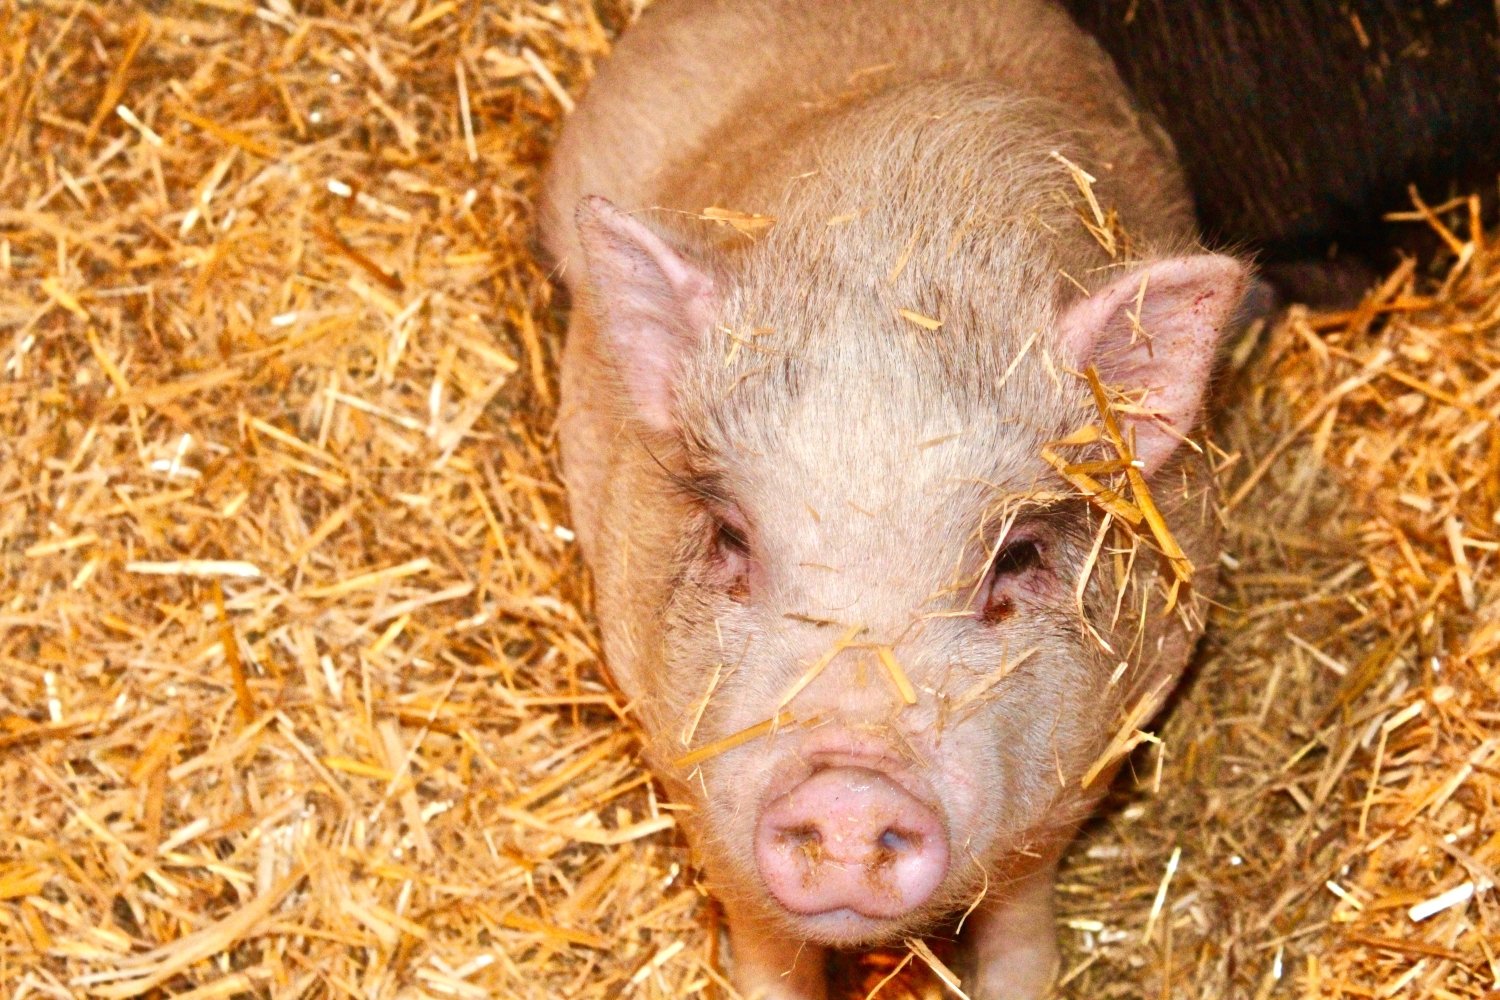 adolescent pig resting in hay